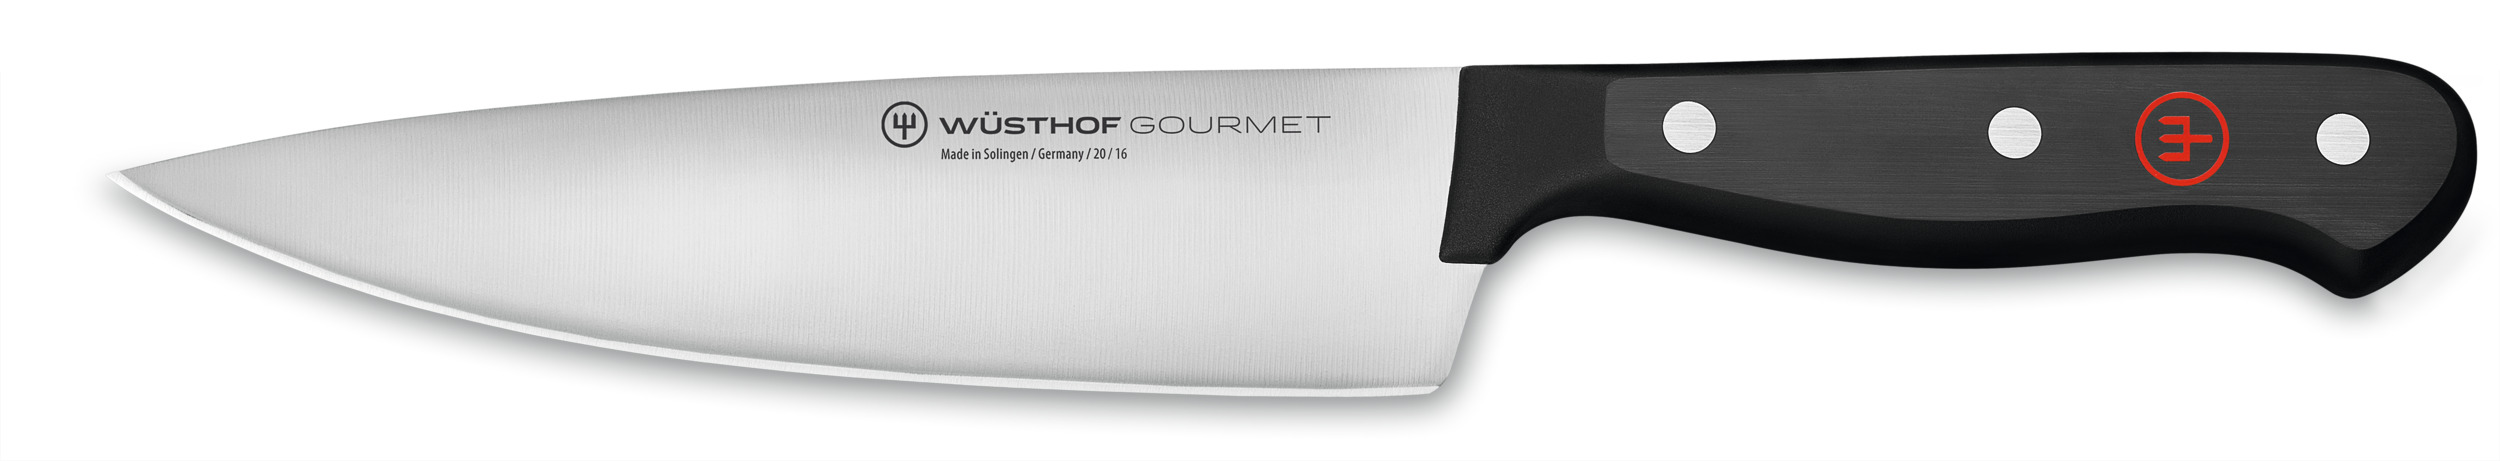 Wüsthof Gourmet Kochmesser 16 cm